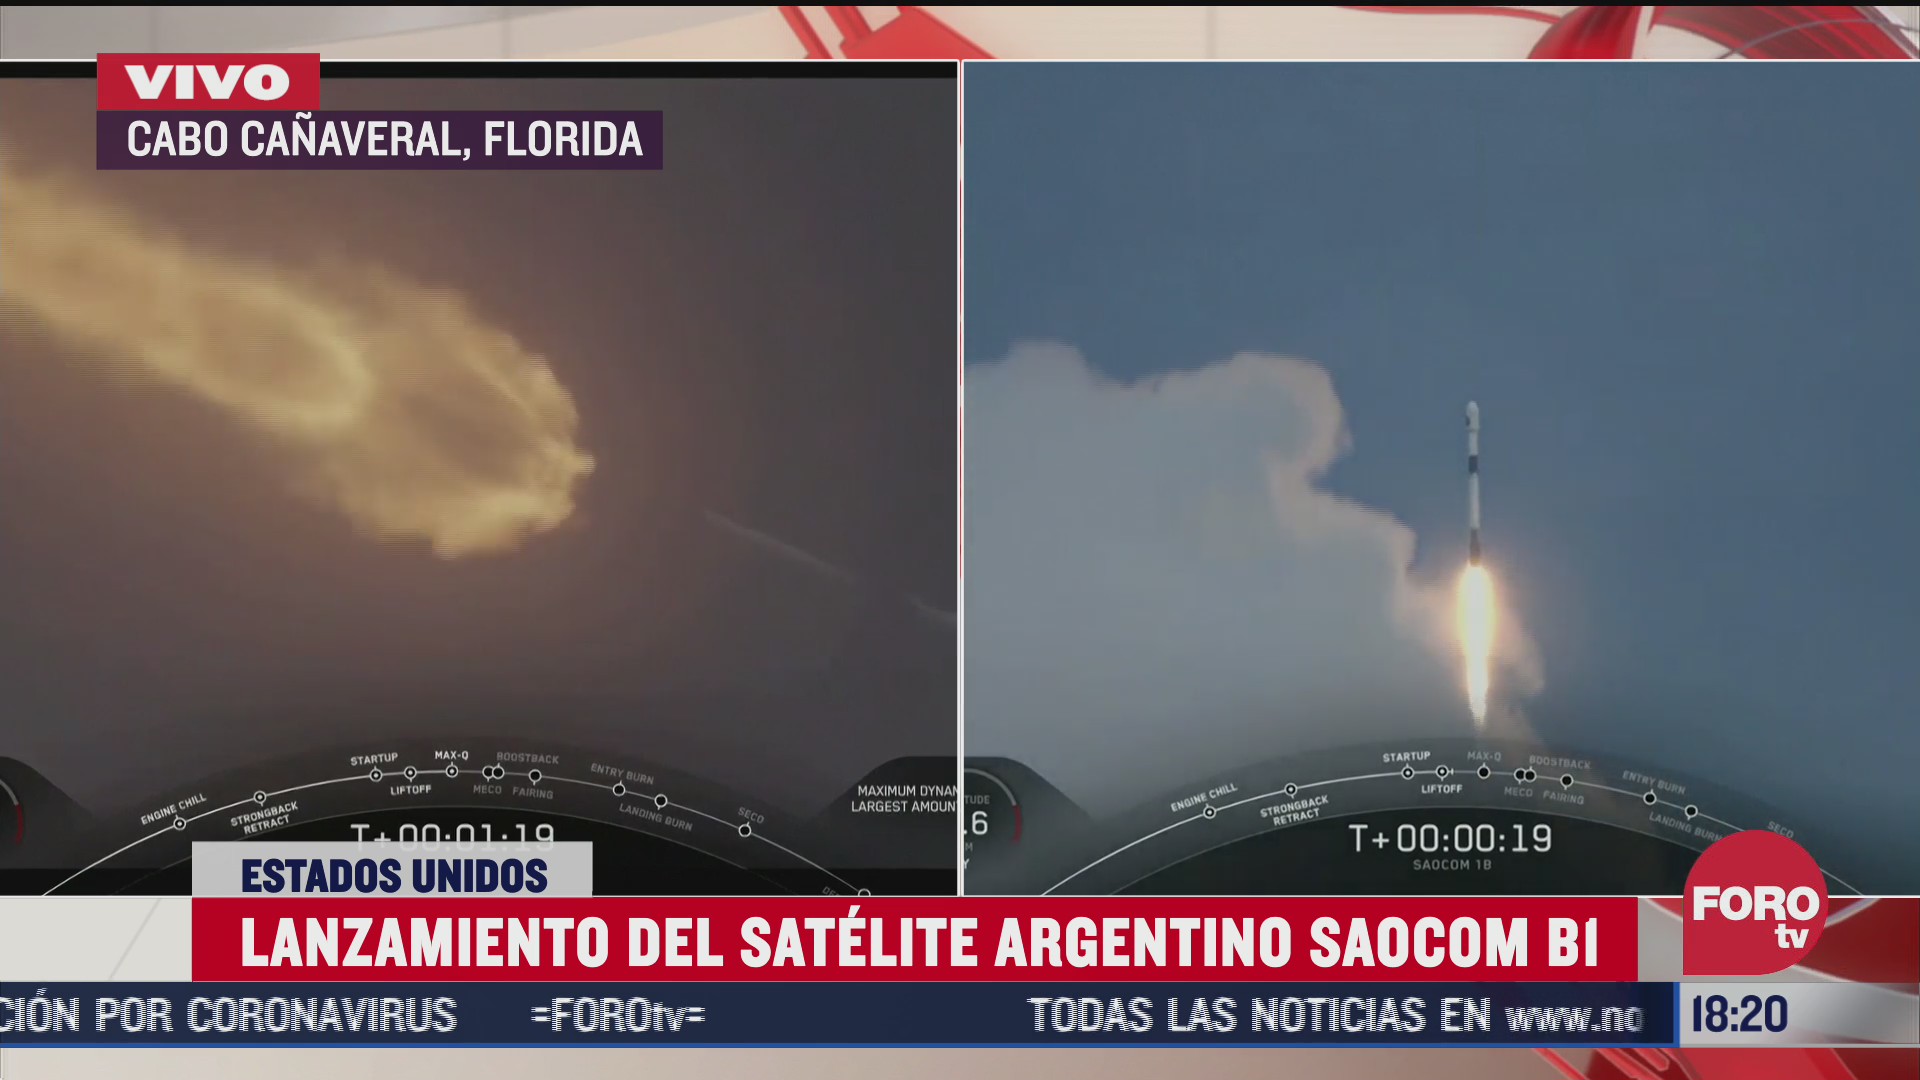 space x pone en orbita satelite argentino